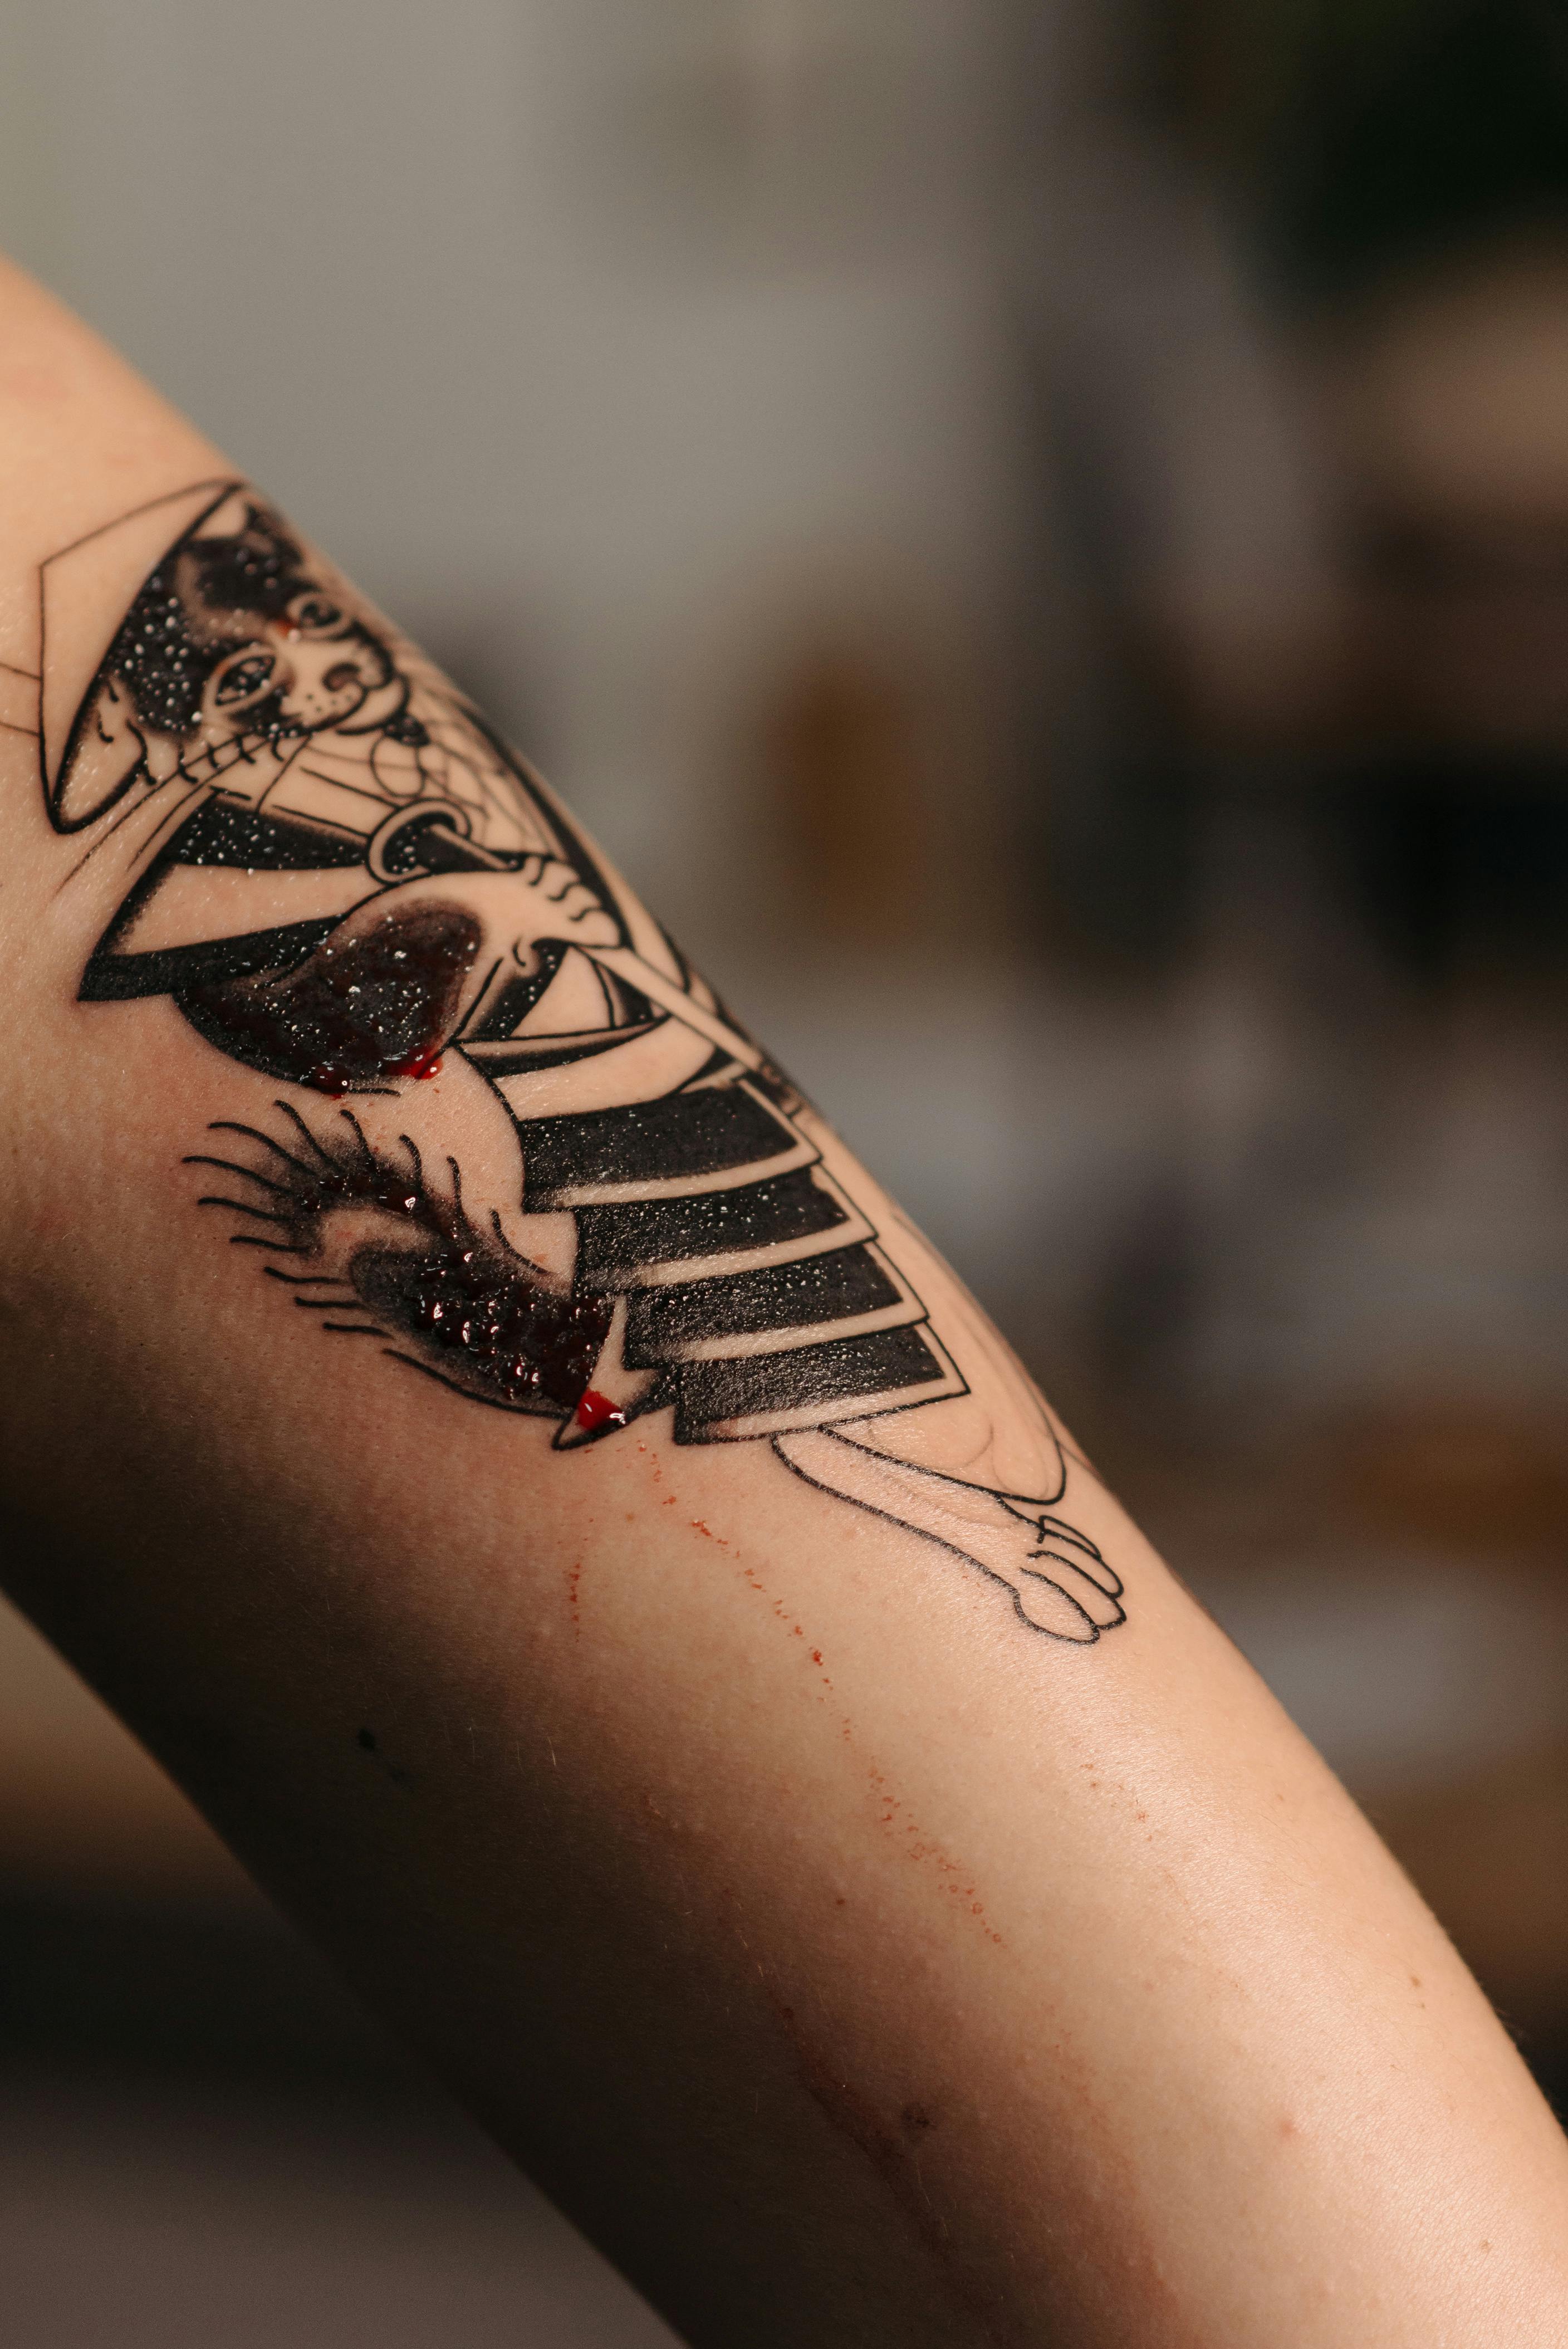 Falling Inspired Tattoo Design - Etsy